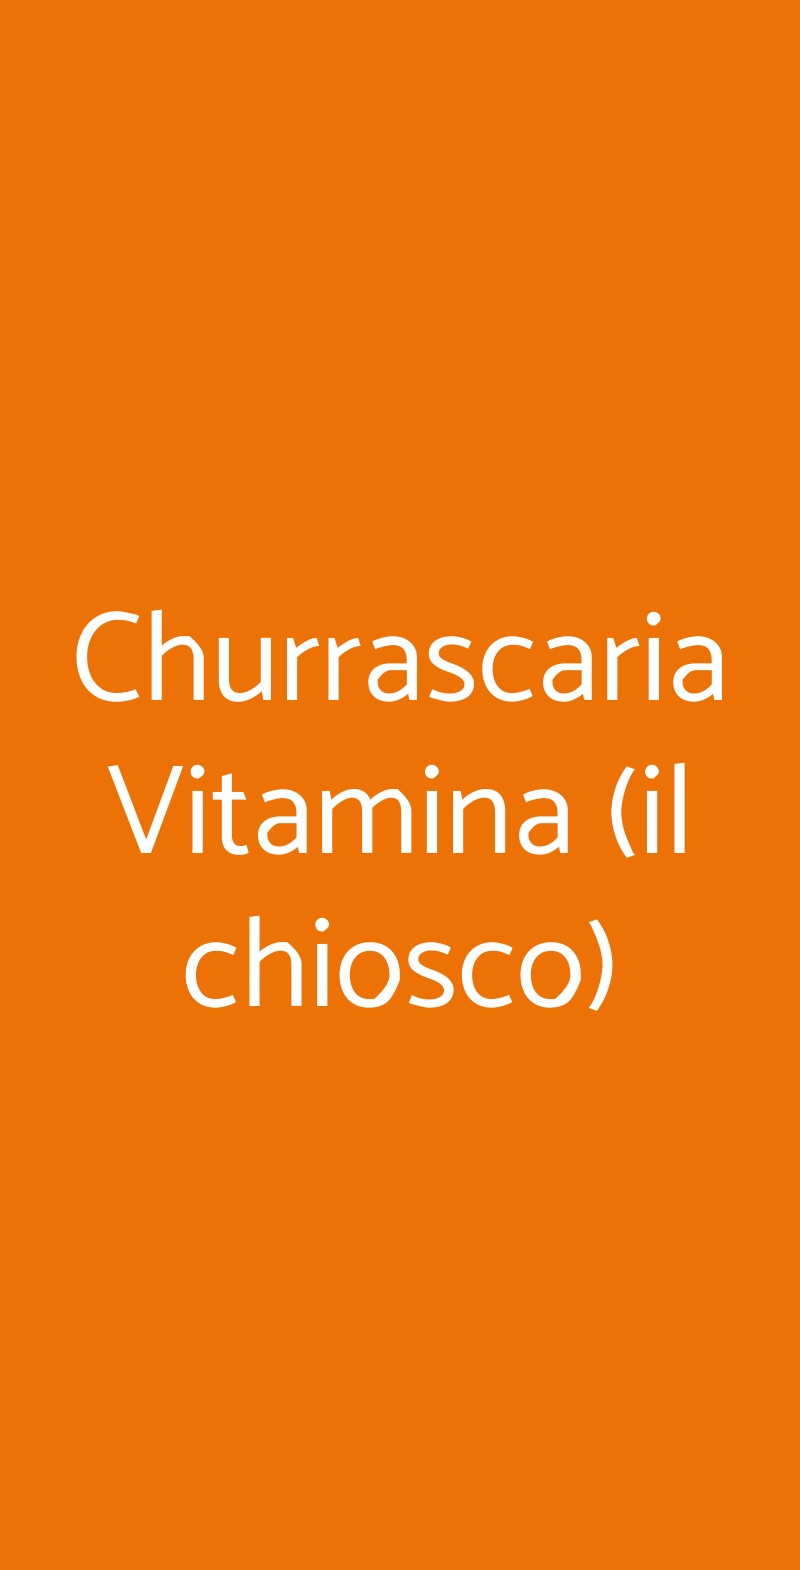 Churrascaria Vitamina (il chiosco) Bologna menù 1 pagina